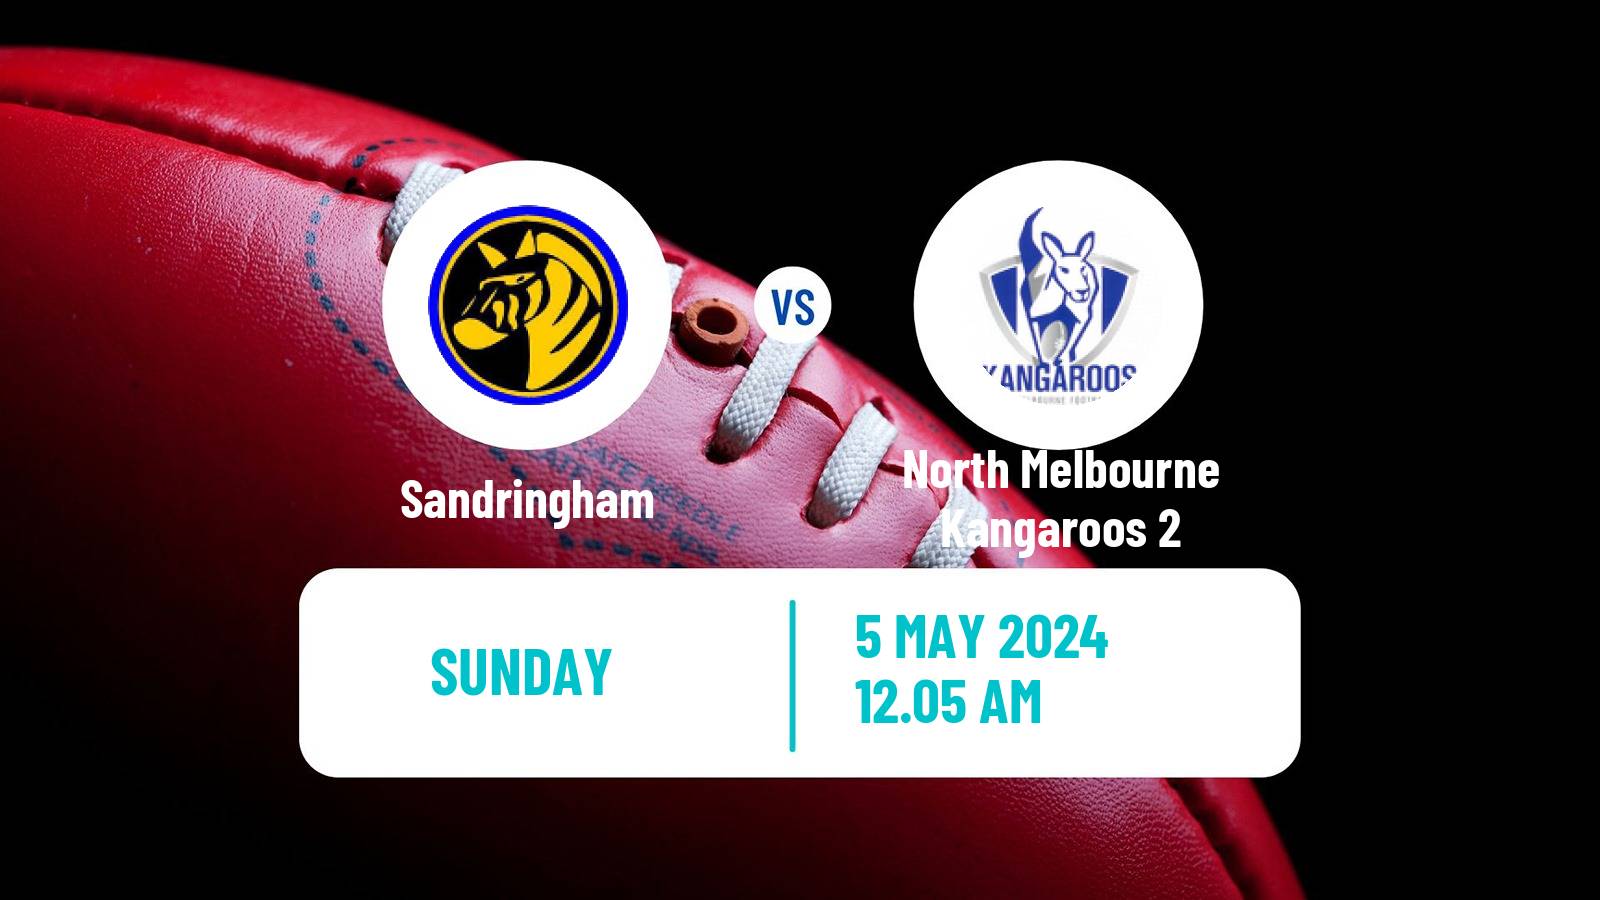 Aussie rules VFL Sandringham - North Melbourne Kangaroos 2